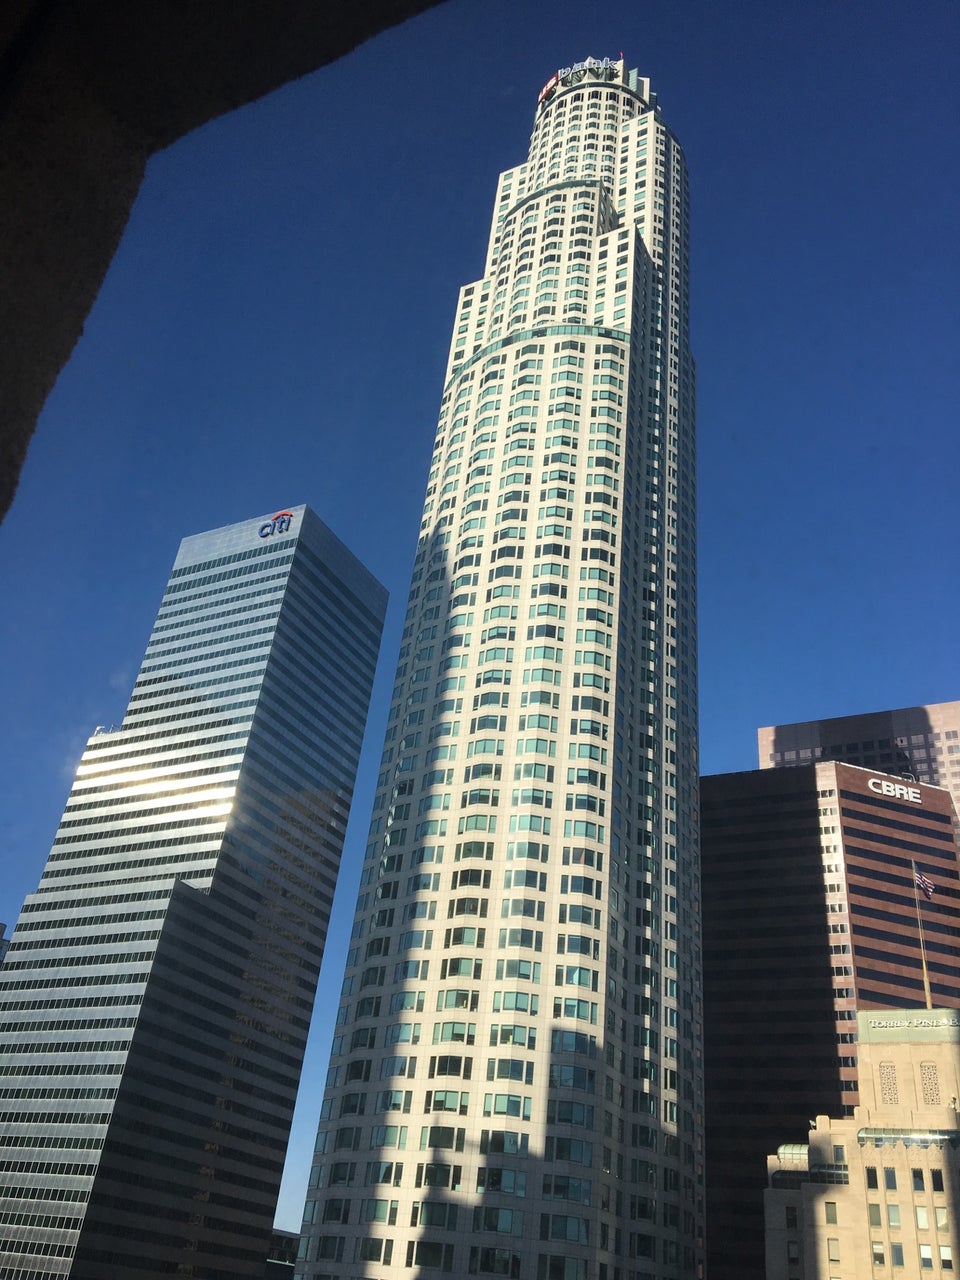 Photo of Hilton Checkers Los Angeles